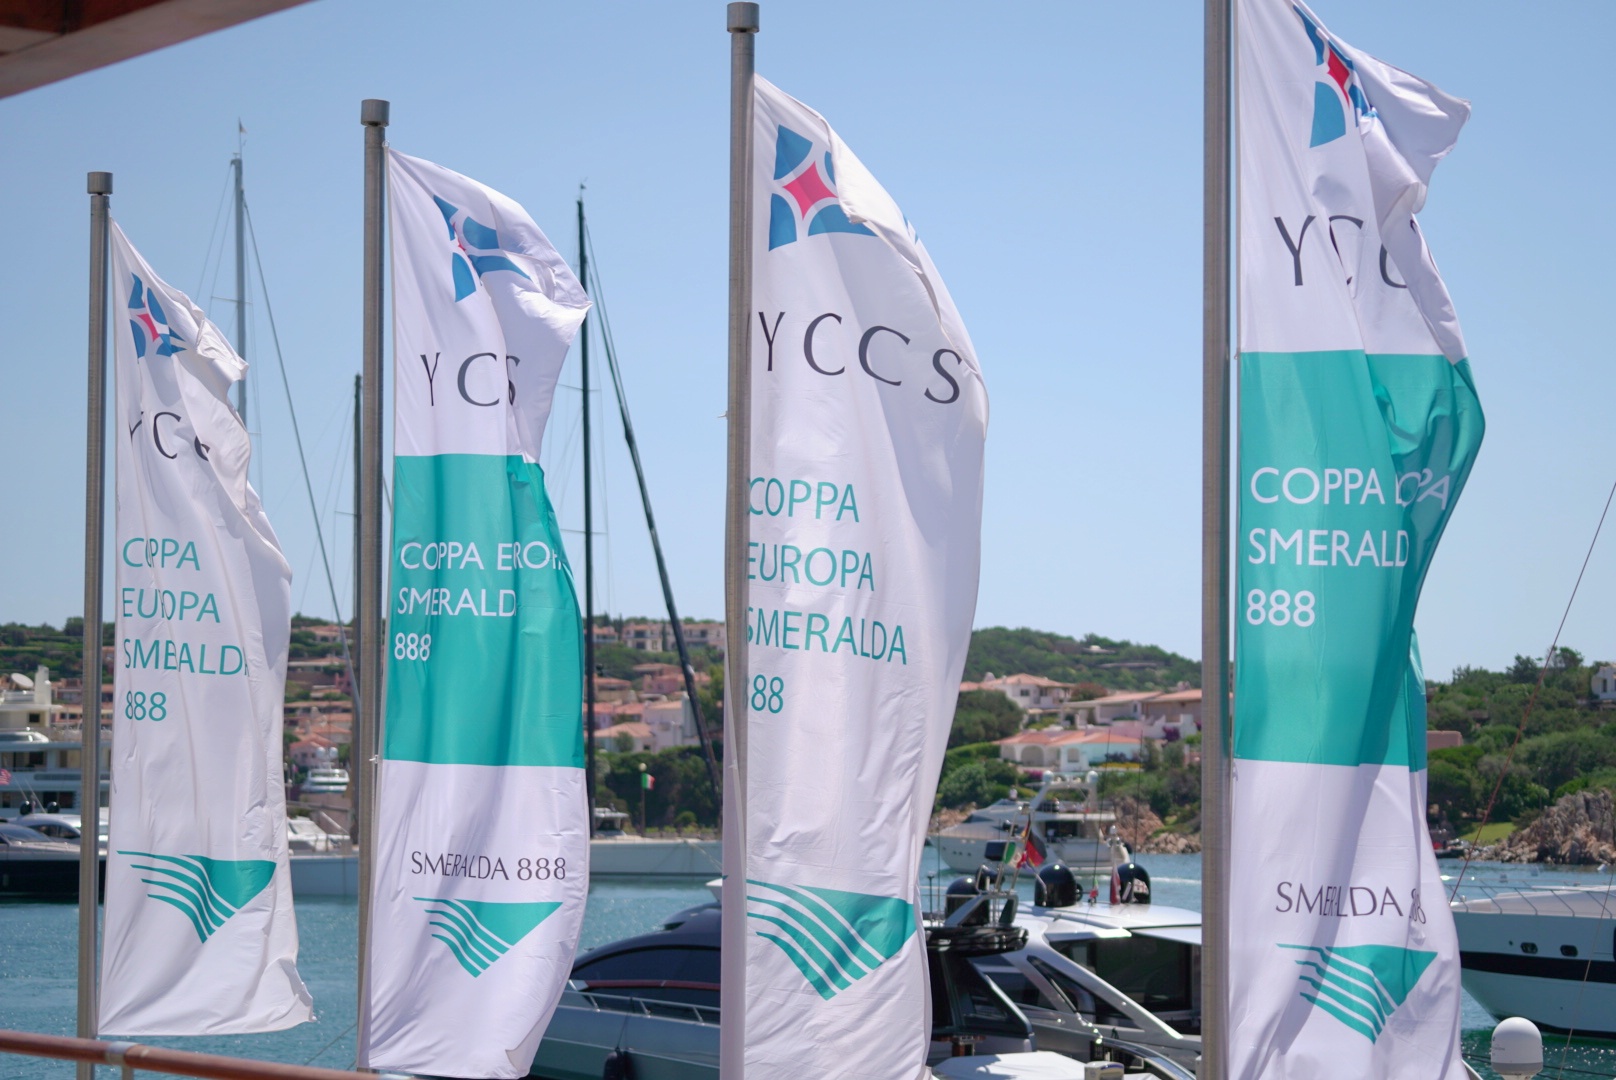 19th edition of Coppa Europa Smeralda 888 starts today - Press Release - Yacht Club Costa Smeralda